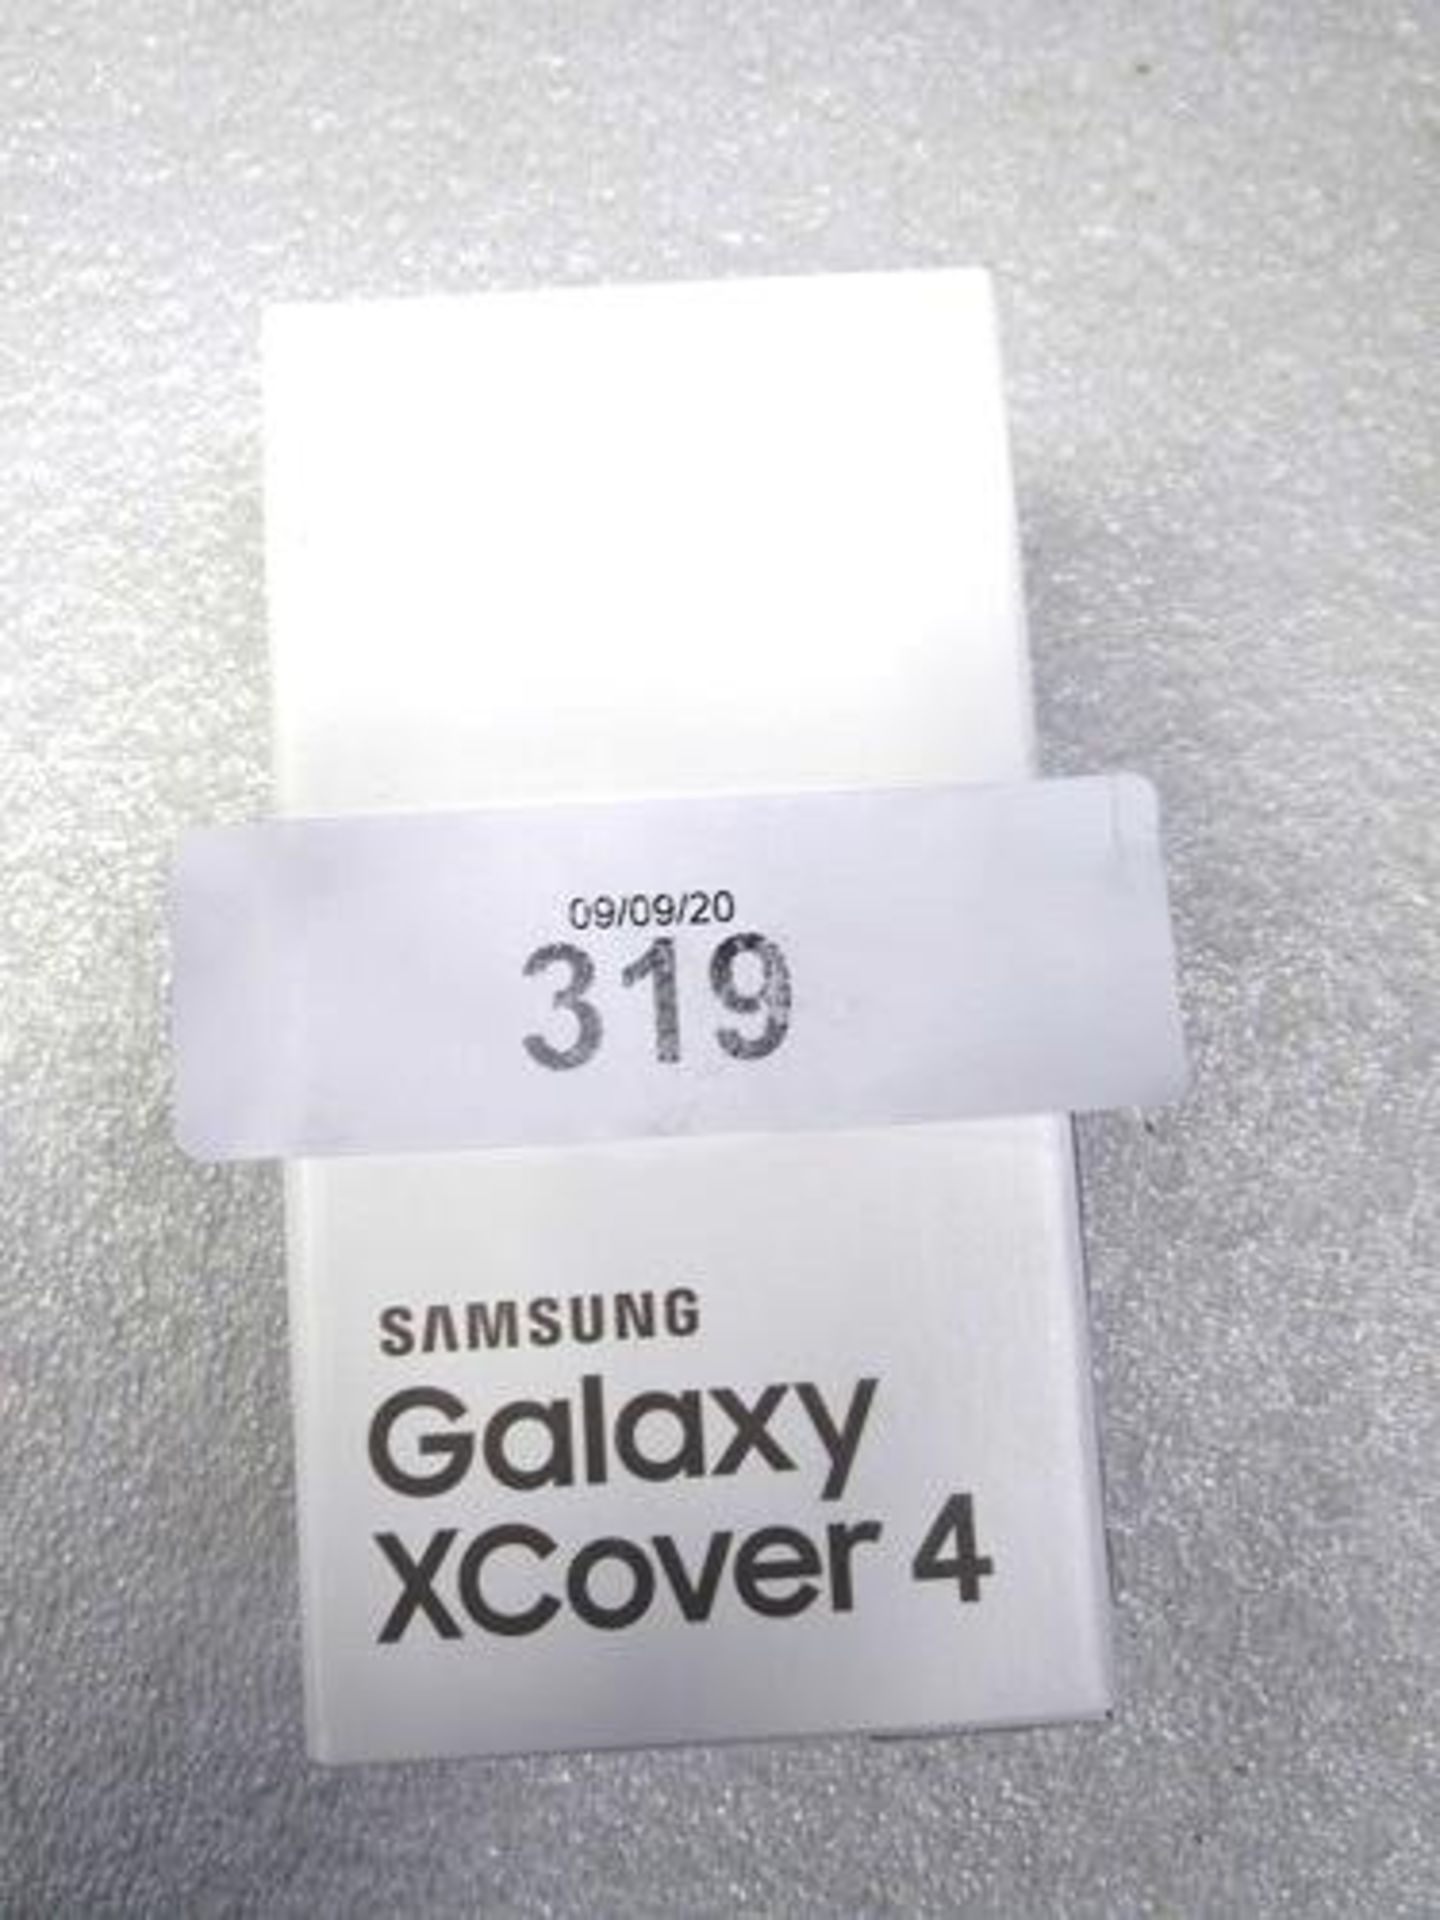 A black Samsung 16gb Galaxy XCover 4 smart phone, model SM-G390F, IMEI: 355215/10 560205/1 -